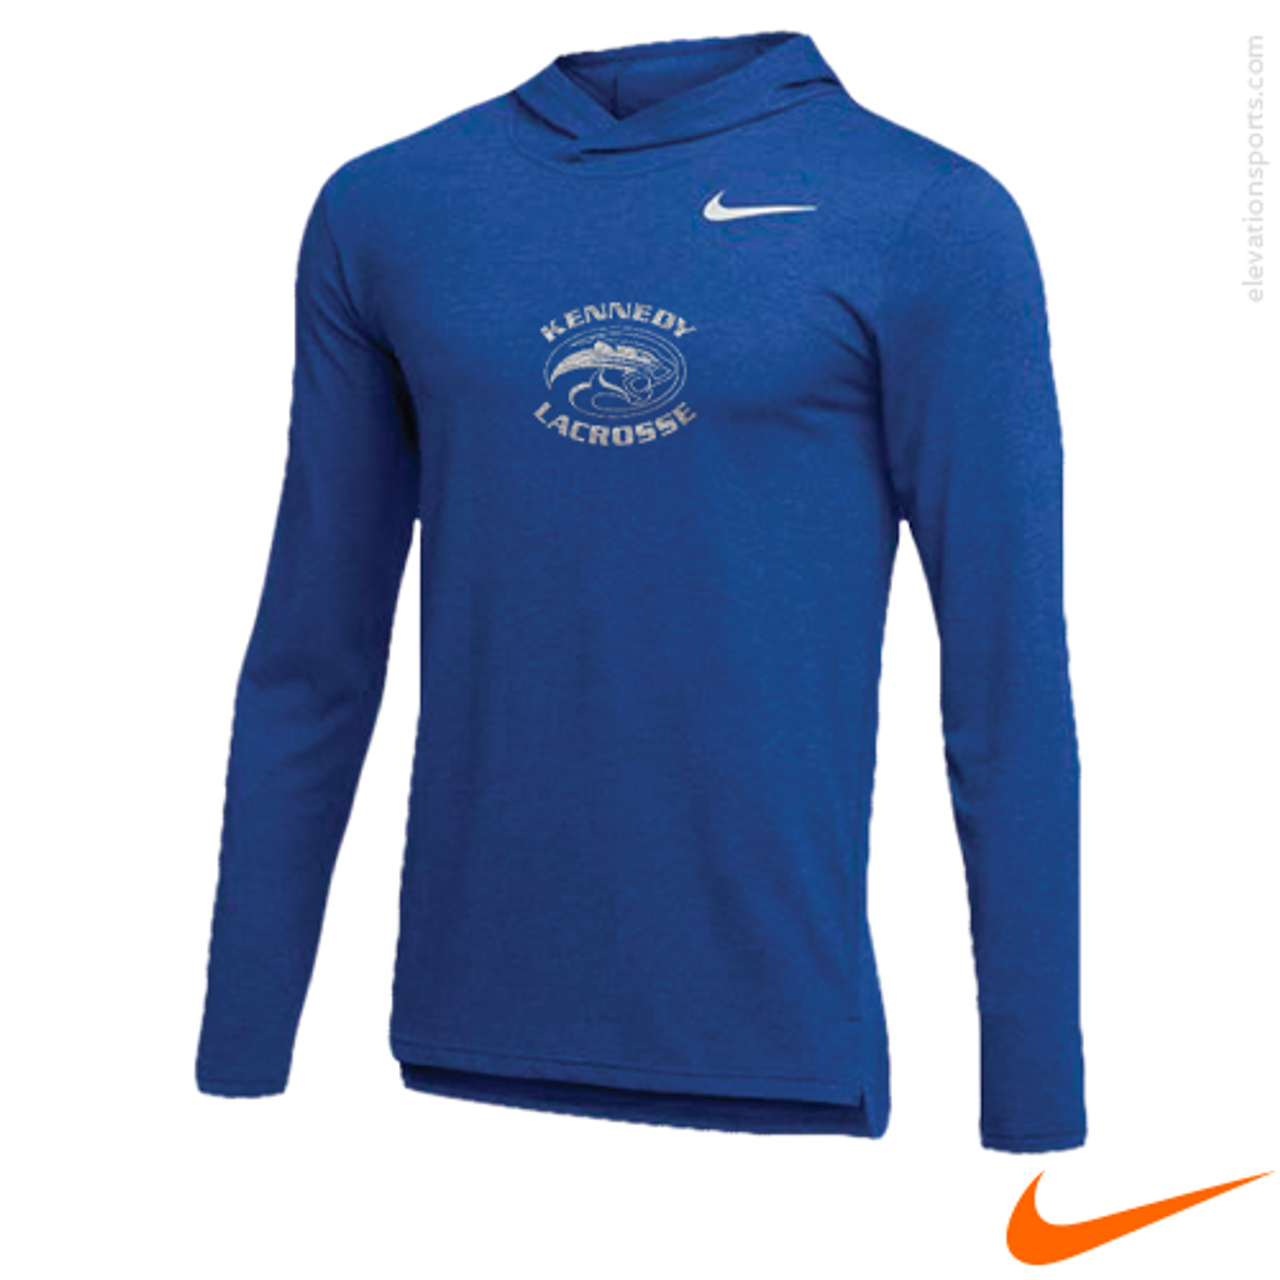 Nike Hooded Shirts Elevation Sports